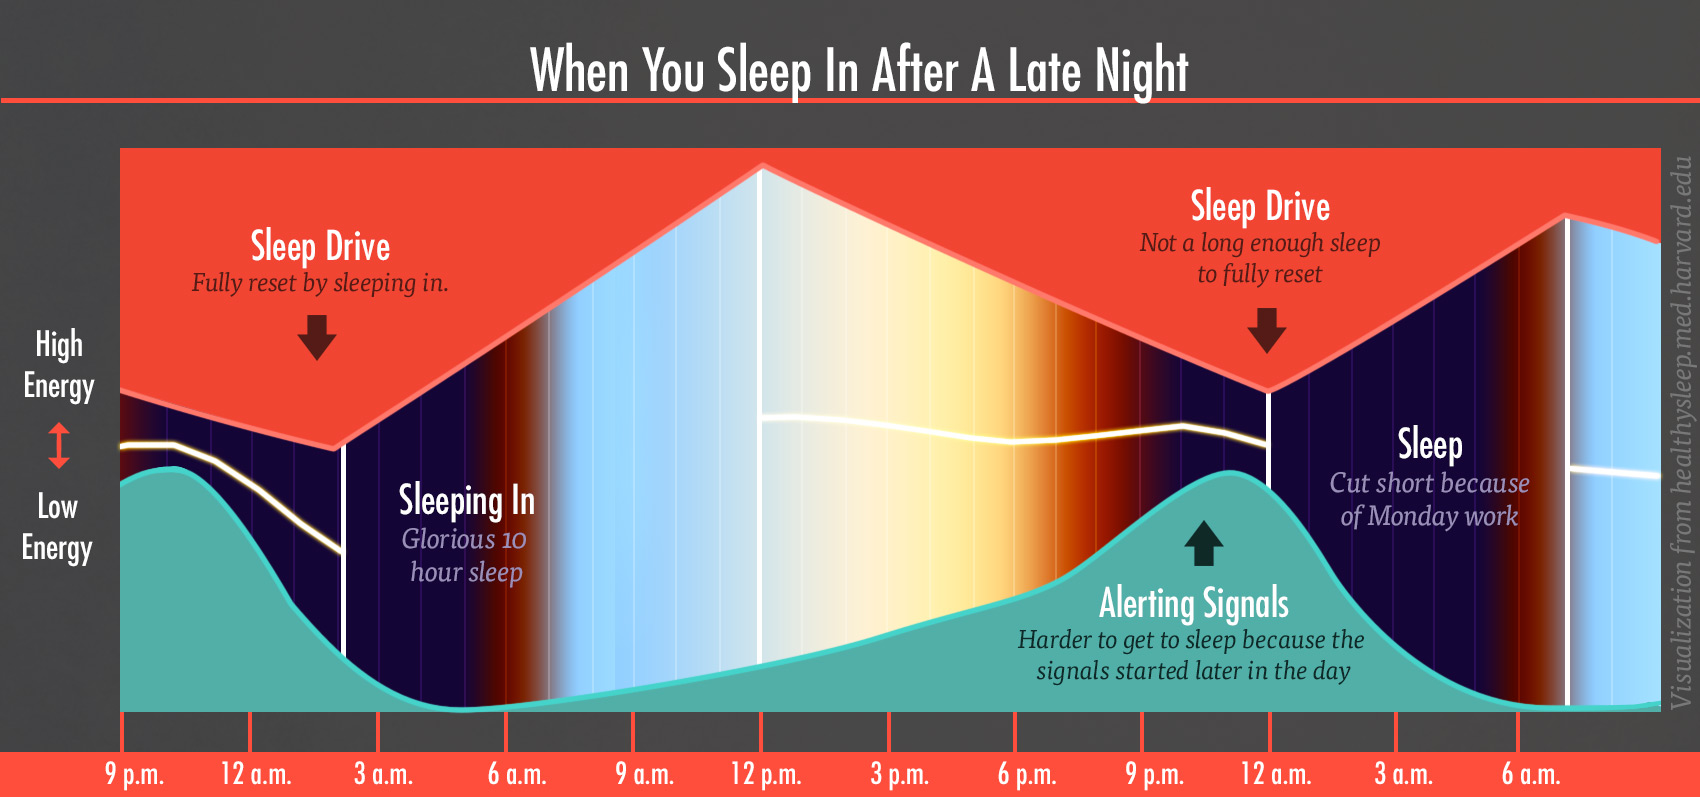 energy-levels-sleep-drive-alert-chart-3-bony-bombshell